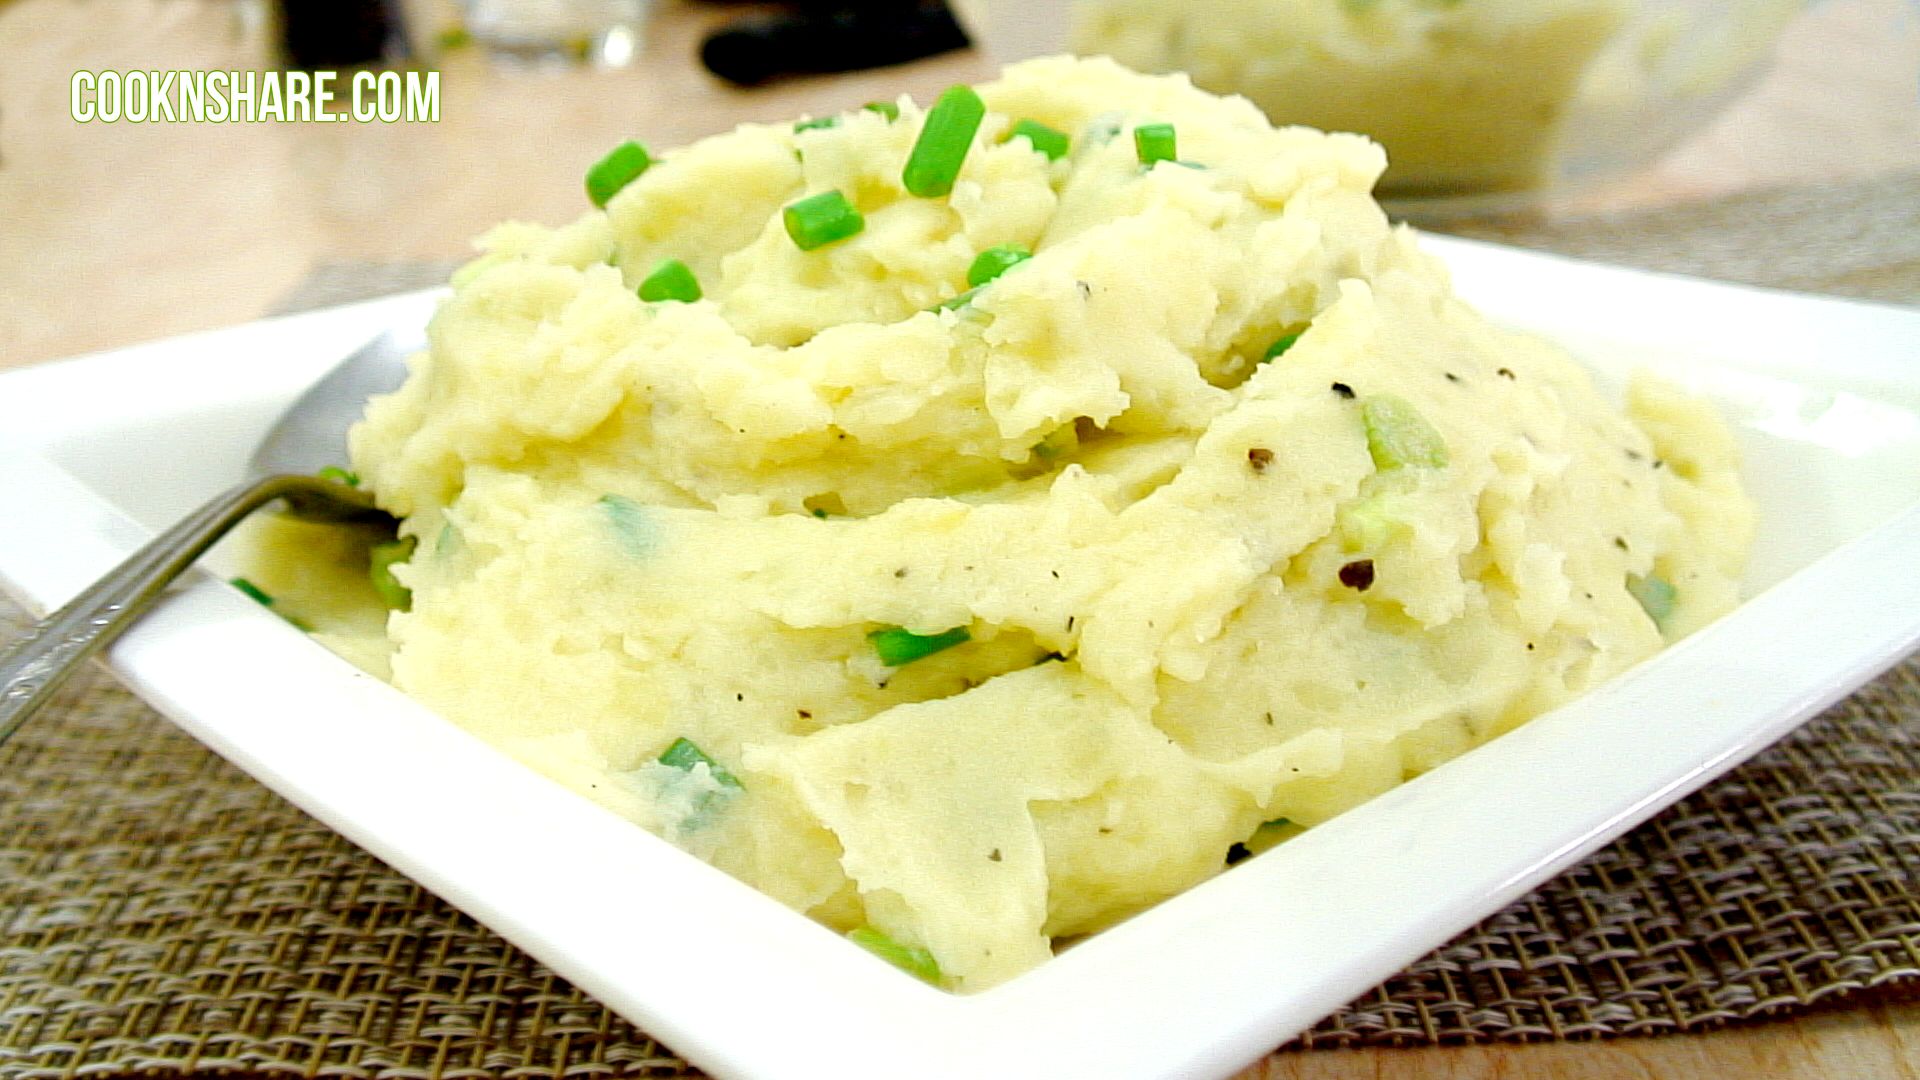 Mashed potatoes with leeks